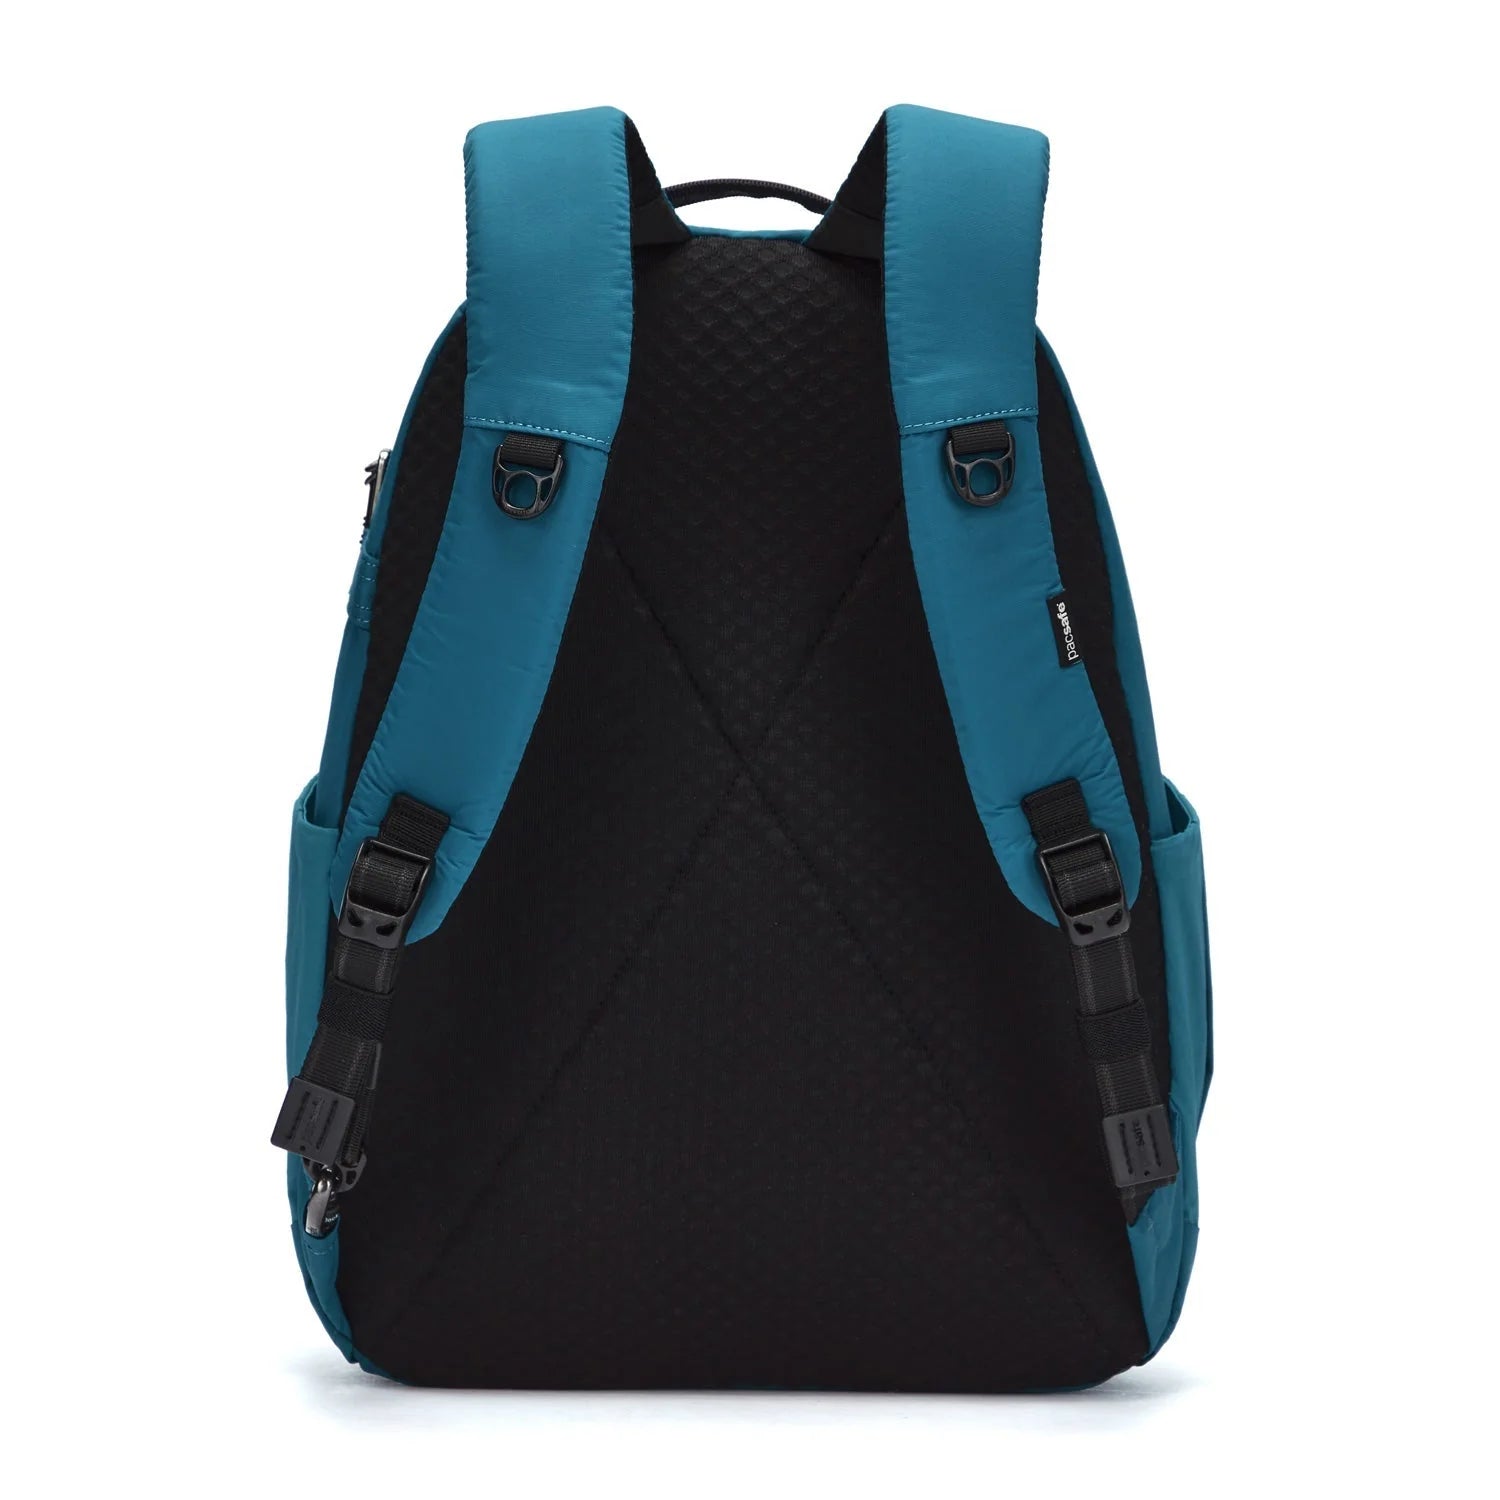 Pacsafe - LS350 Backpack Tidal - Teal - 0